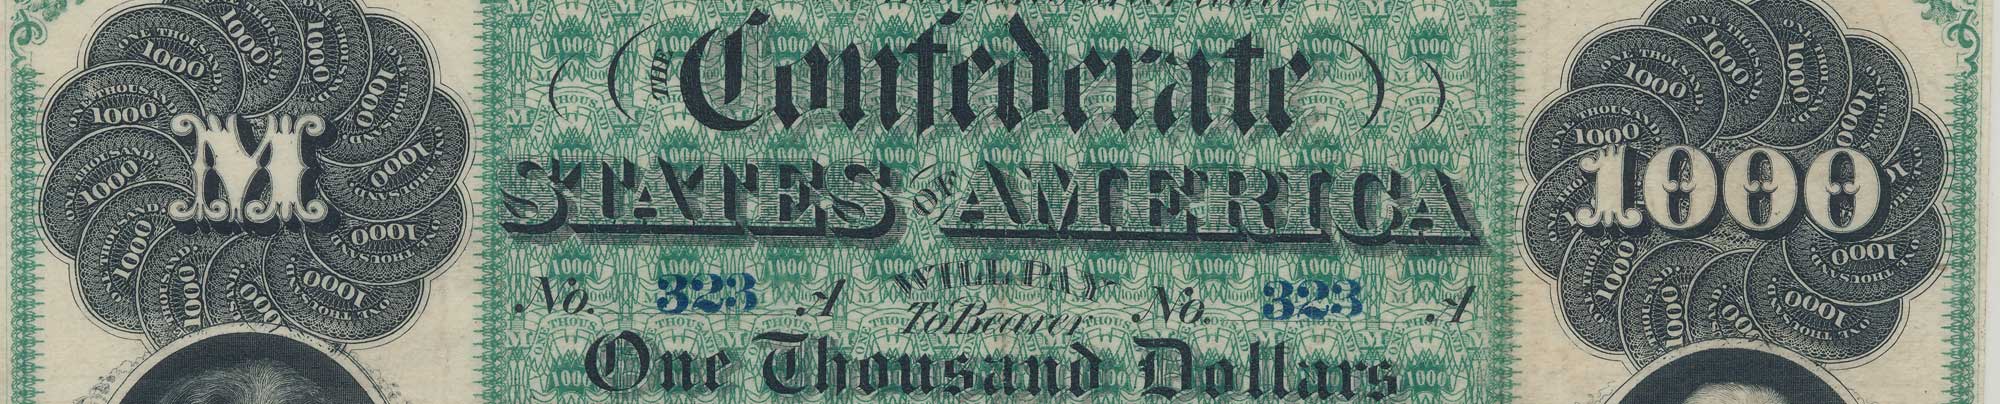 Confederate one thousand dollar bill